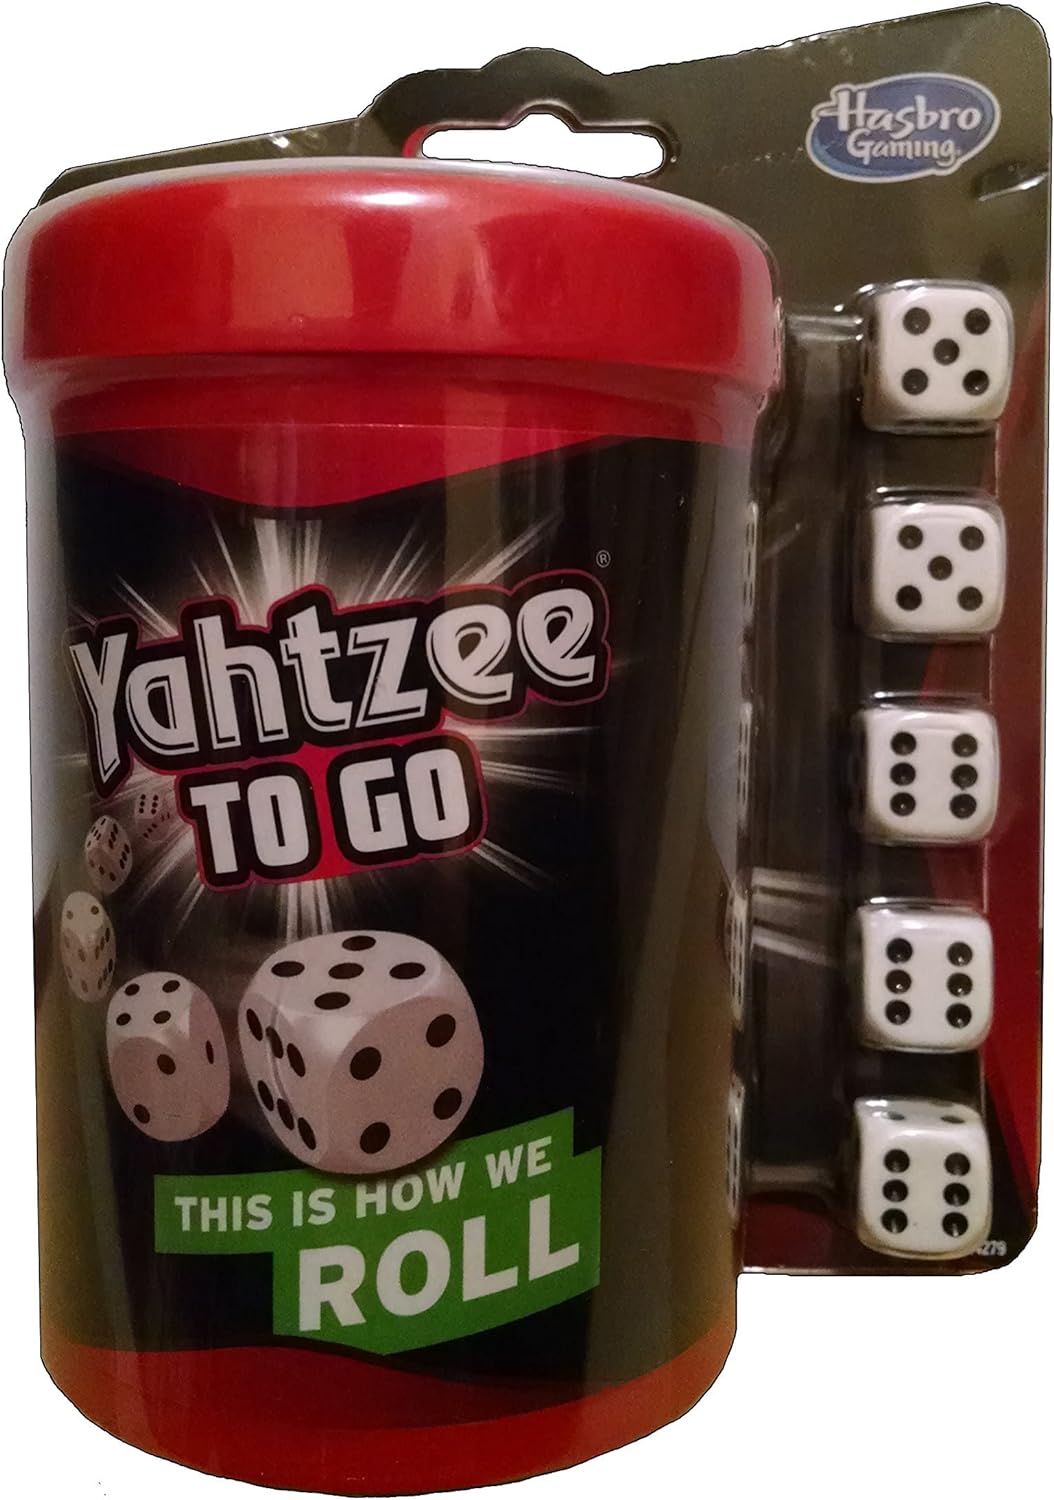 Hasbro Yahtzee to Go Travel Game 2014 Gaming